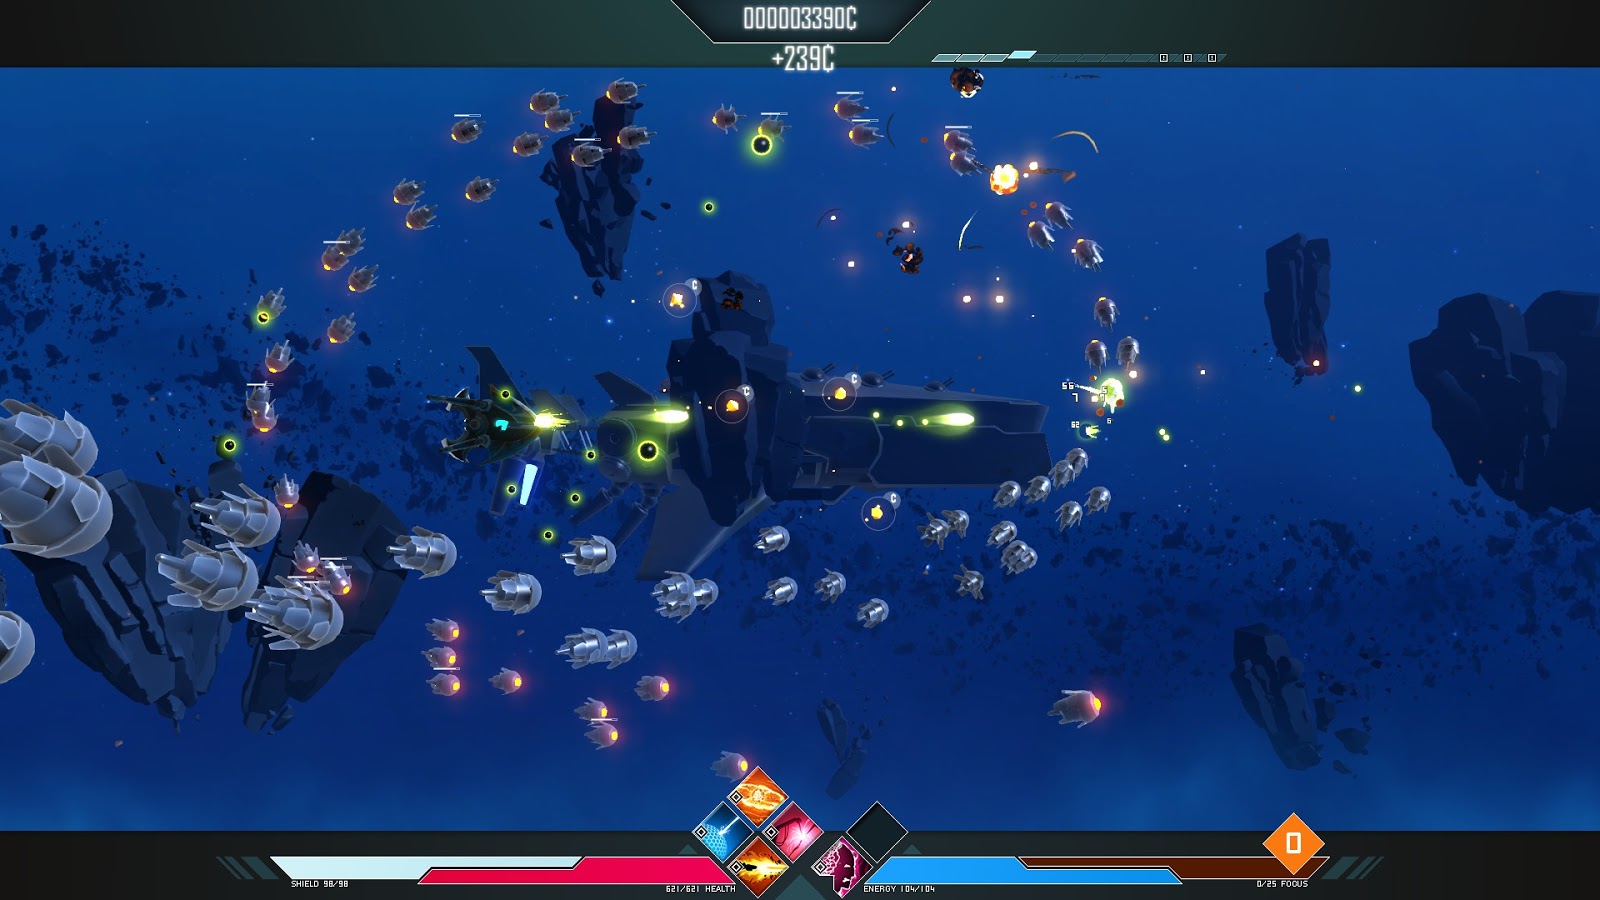 Análise: Drifting Lands (PC) une bem o shoot 'em up com elementos de hack  'n' slash - GameBlast